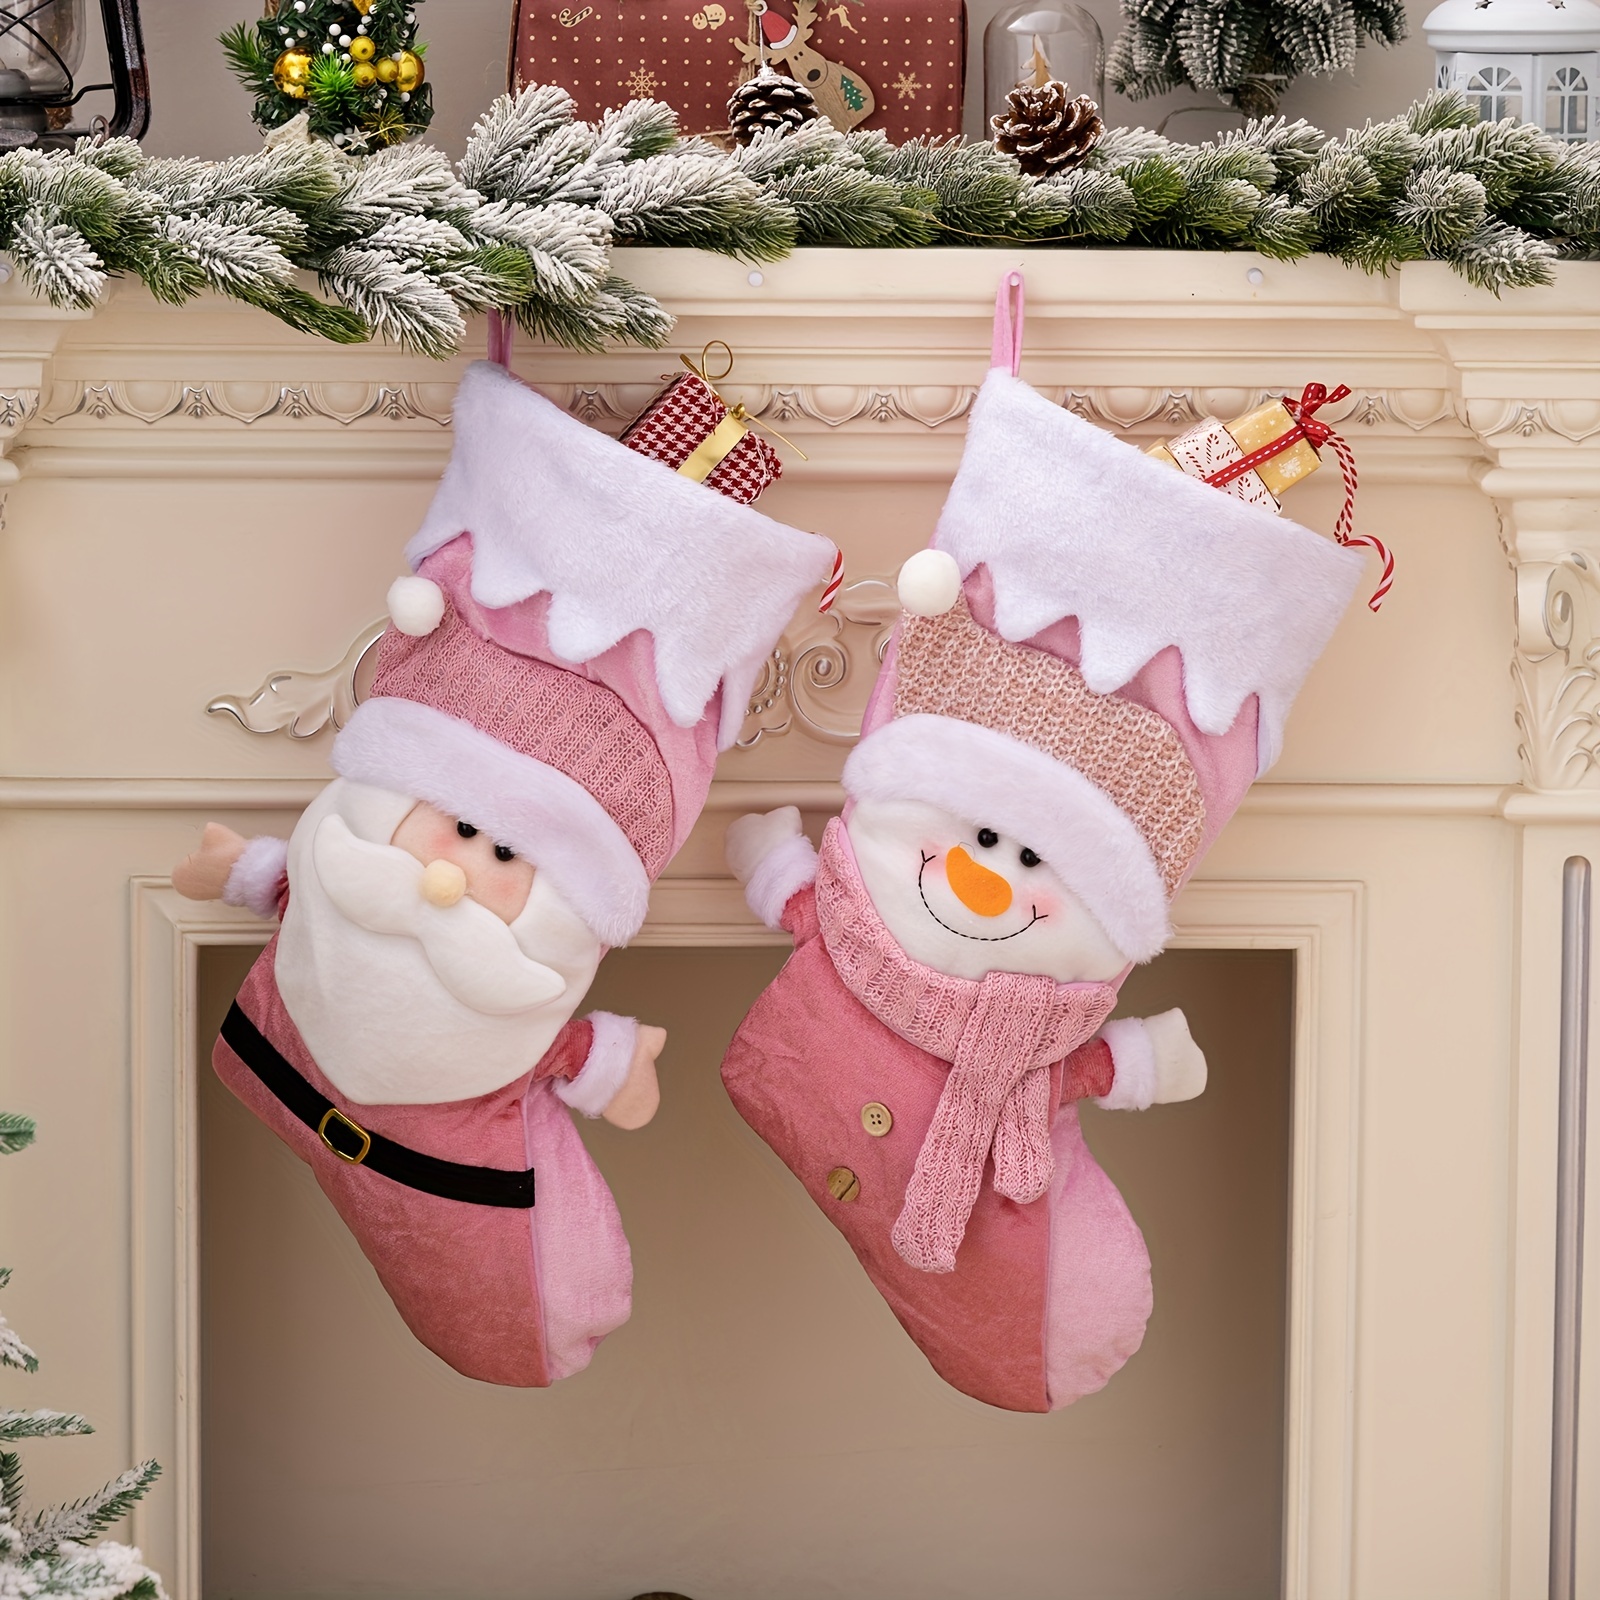 Happy Holidays White Velour Christmas Stockings